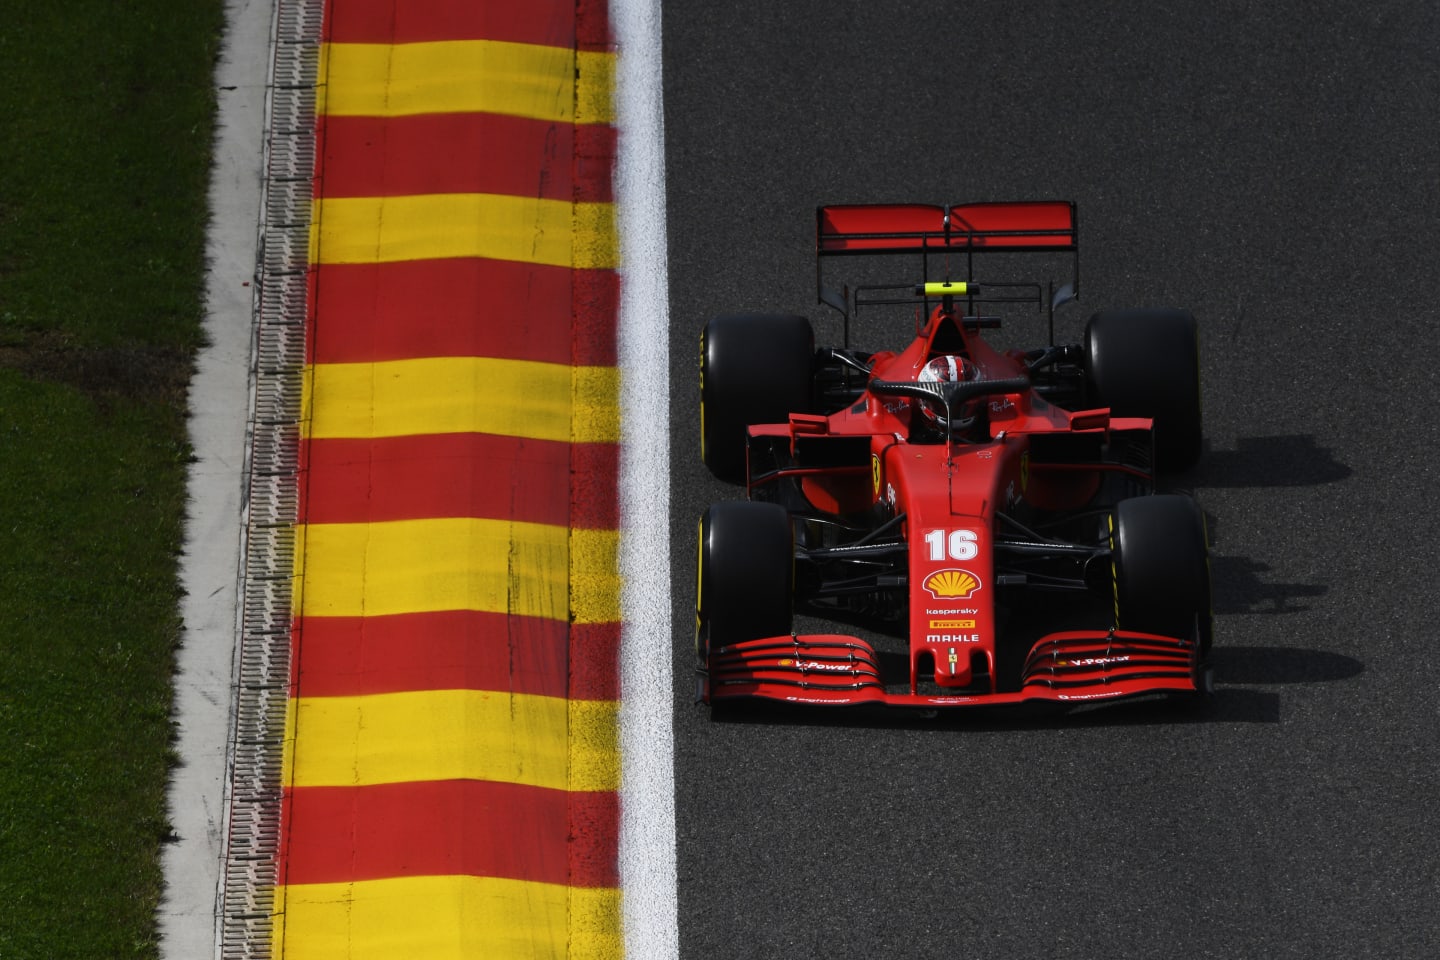 SPA, BELGIUM - AUGUST 29: Charles Leclerc of Monaco driving the (16) Scuderia Ferrari SF1000 on